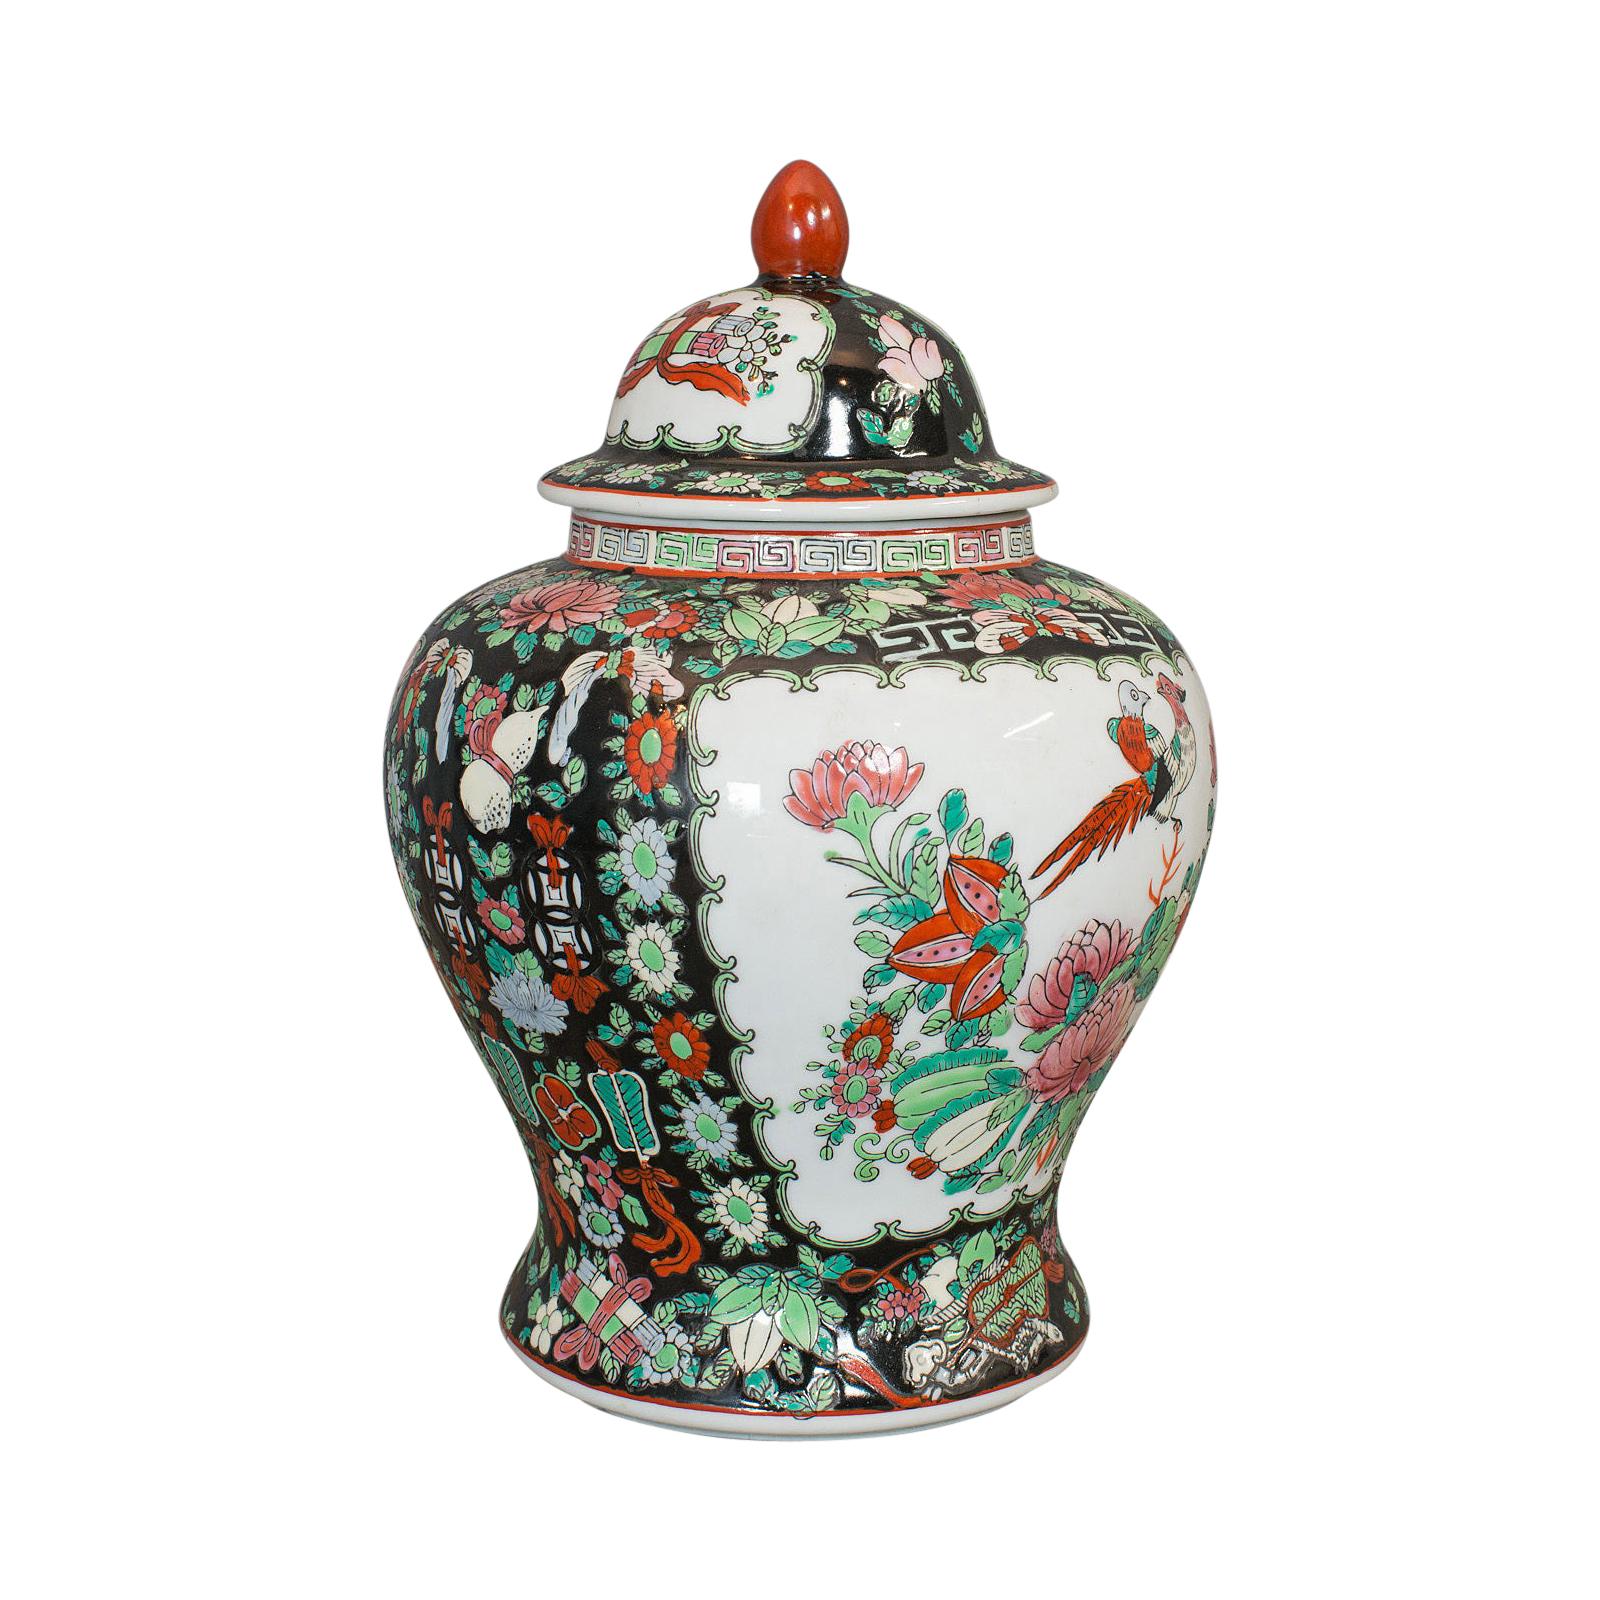 Vintage Spice Jar, Oriental, Ginger, Baluster Urn, Art Deco, 20th Century, 1940